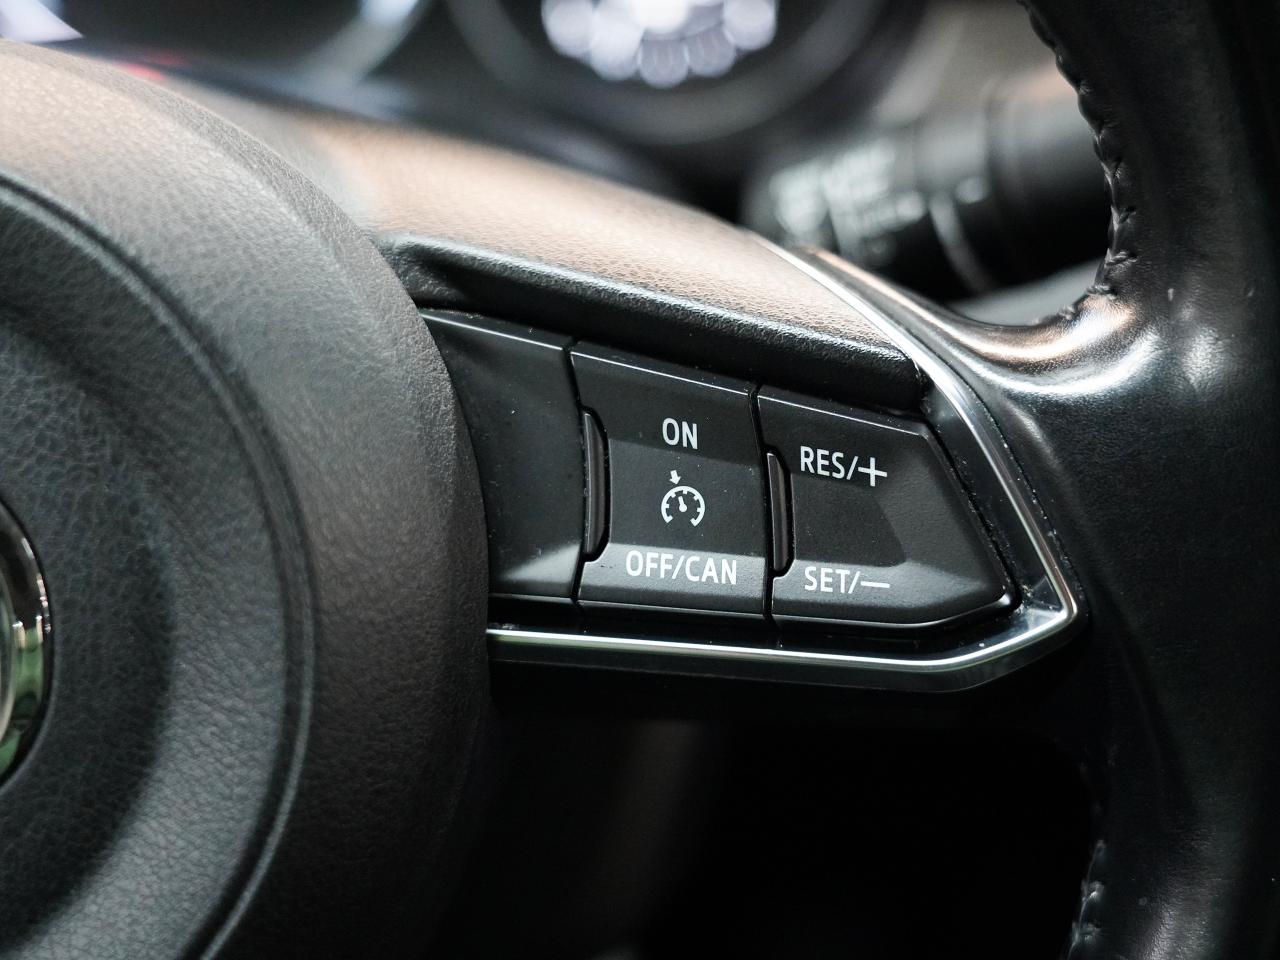 2021 Mazda MAZDA6 GS-L | Leather | Sunroof | Heated Seats | CarPlay